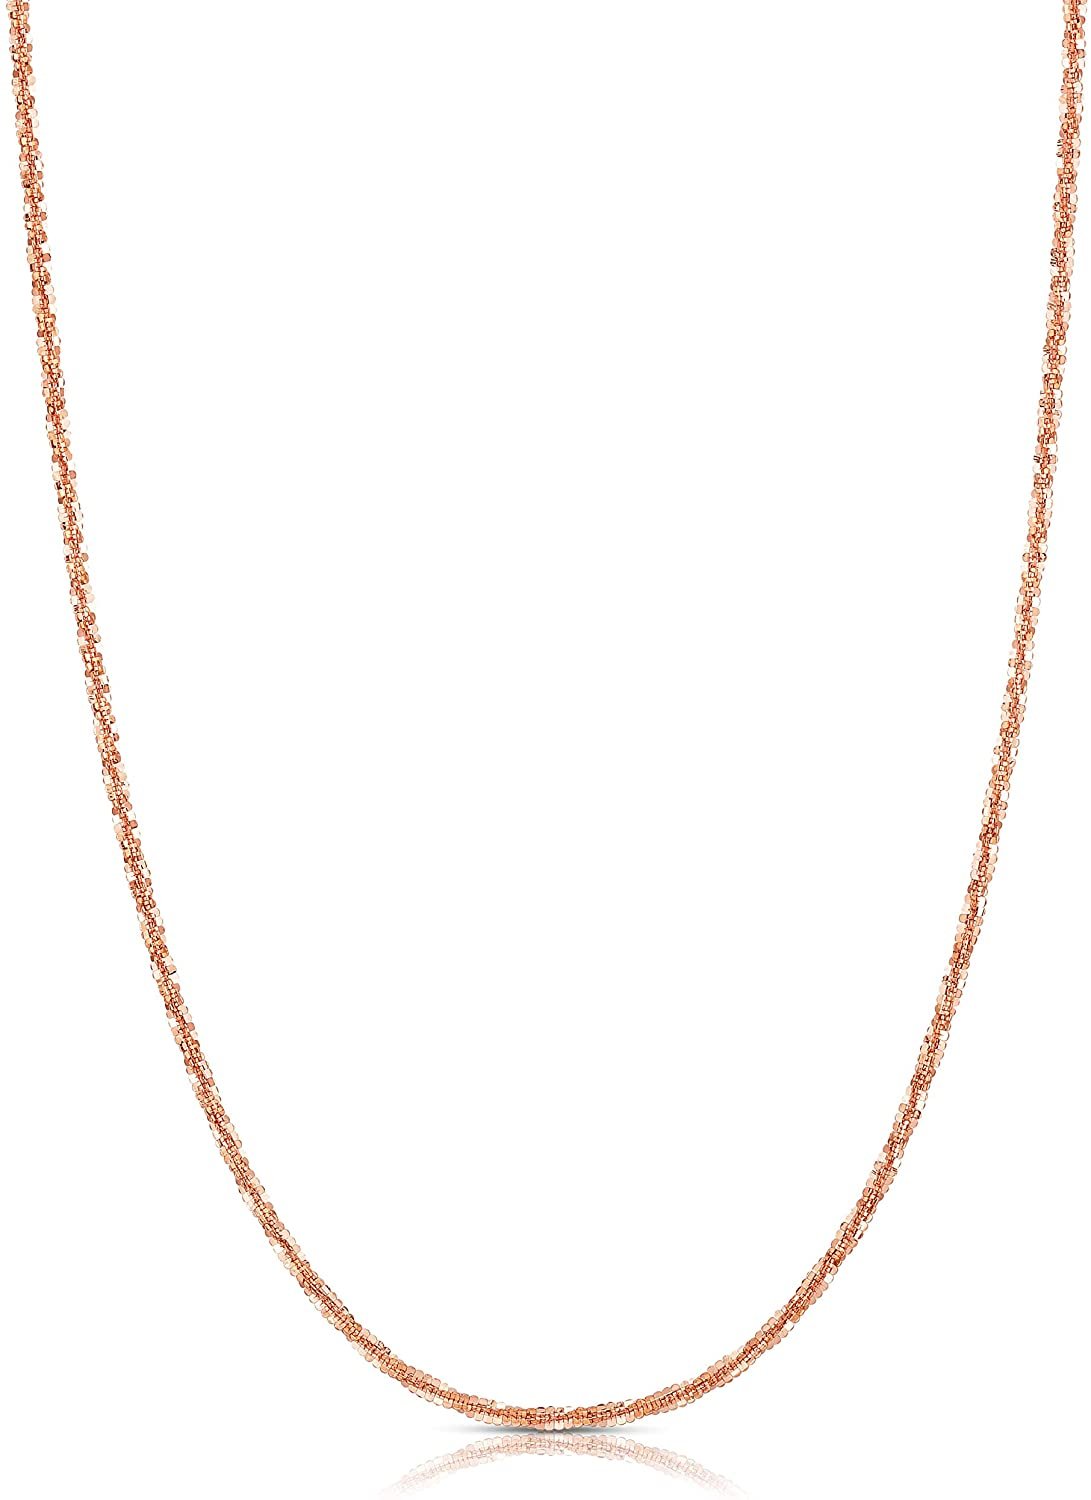 Floreo 14k Fine Gold 1.5mm Sparkle Criss Cross Chain Necklace